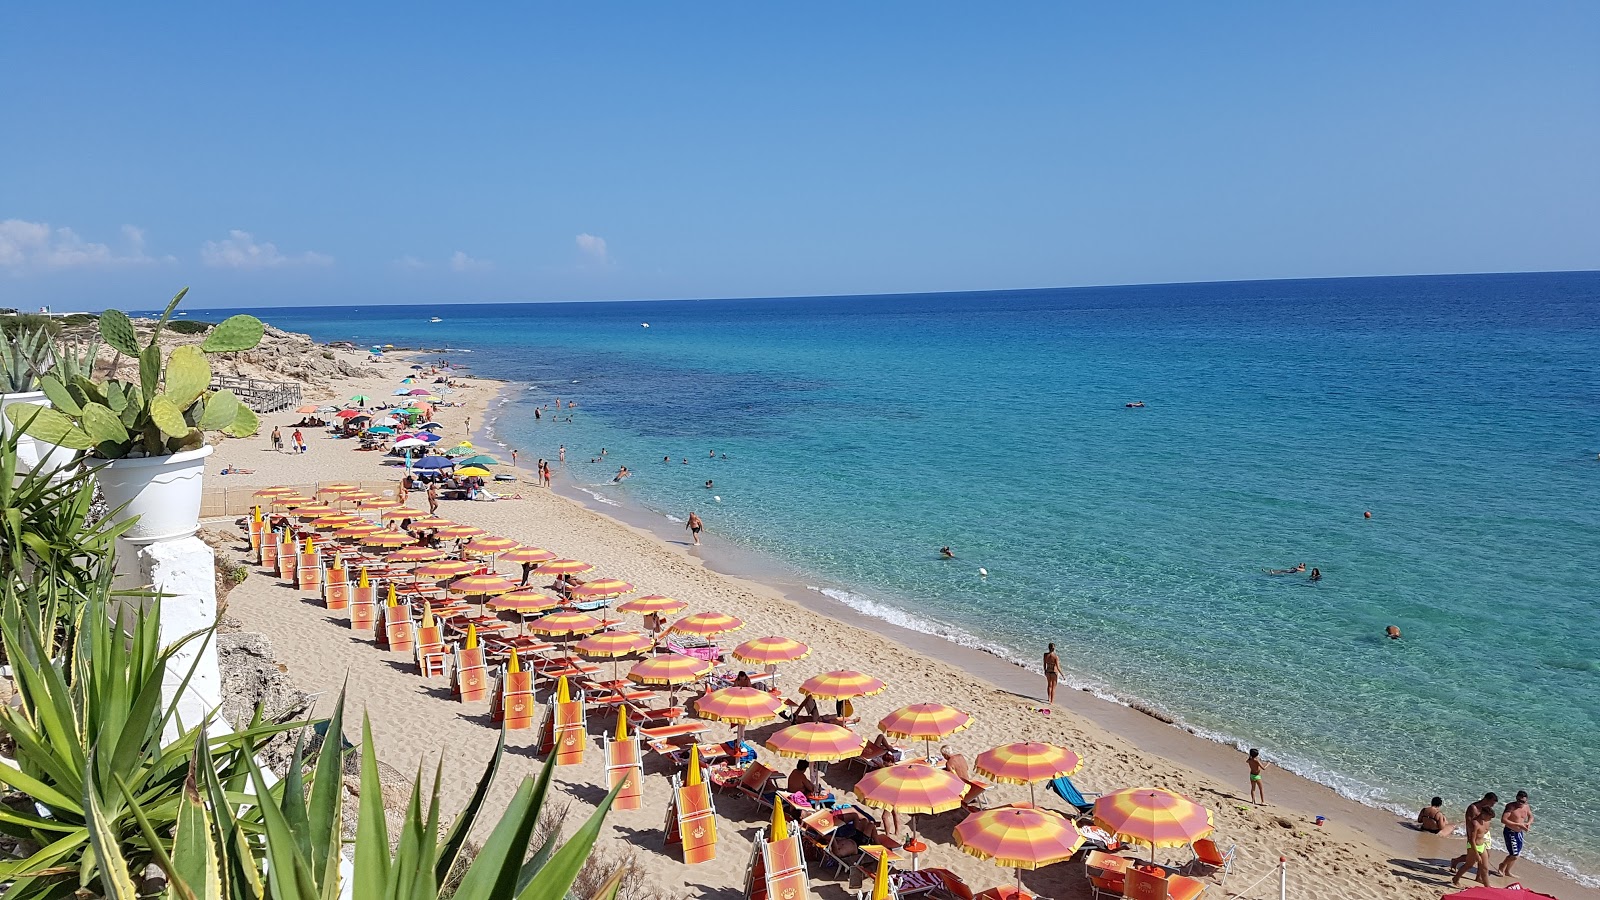 Spiaggia dell'Acquadolce'in fotoğrafı parlak ince kum yüzey ile